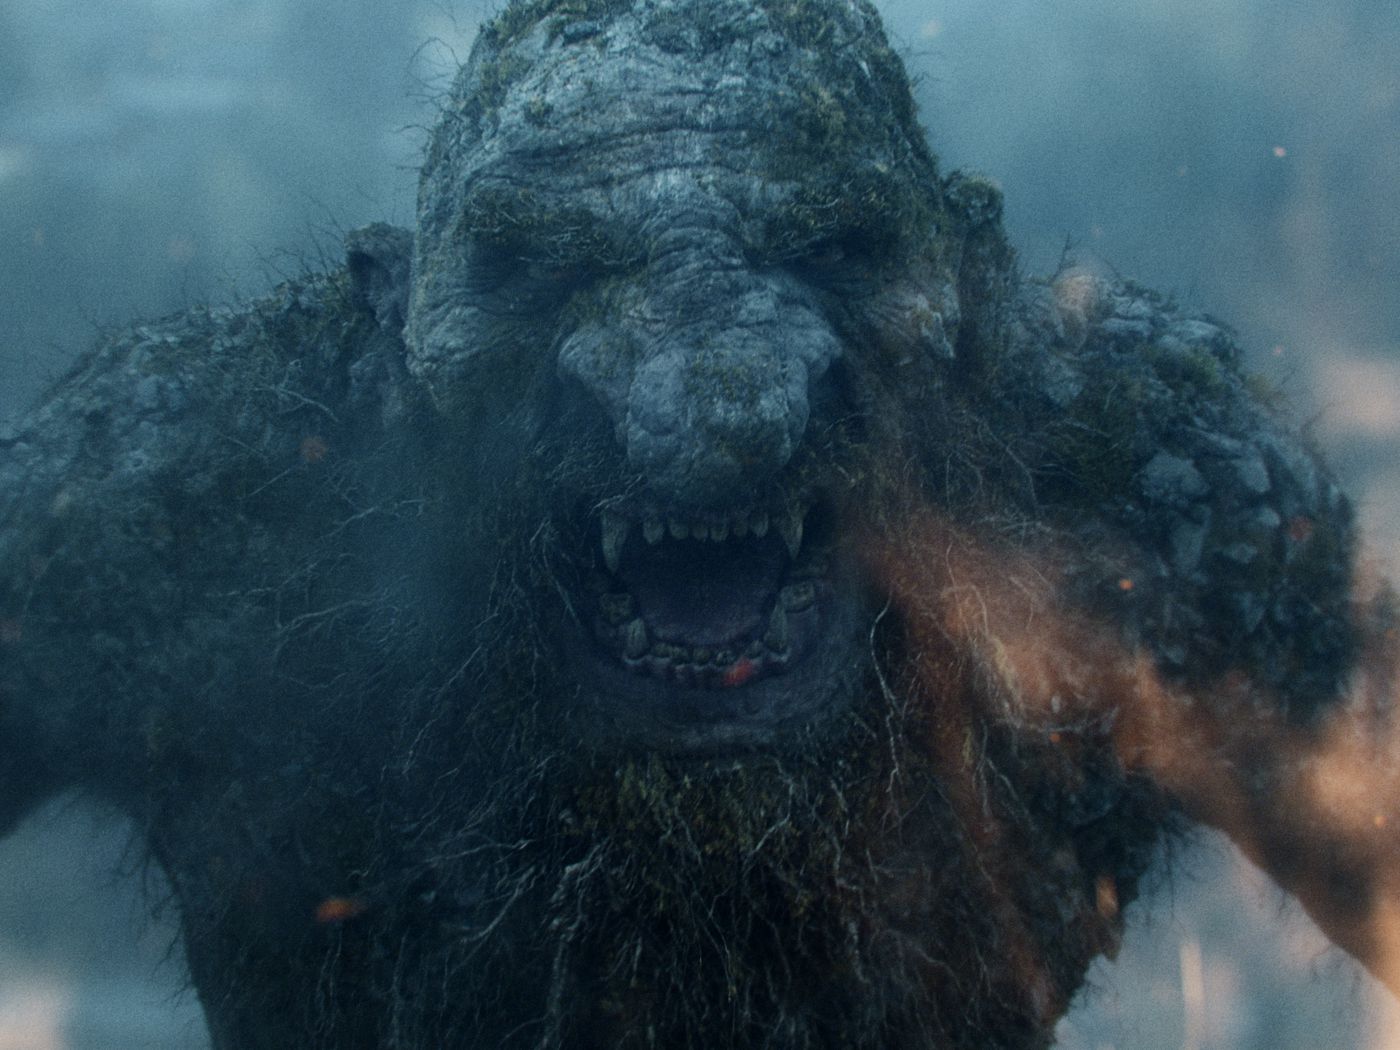 Troll review: Norway has its own city-smashing Godzilla - Polygon